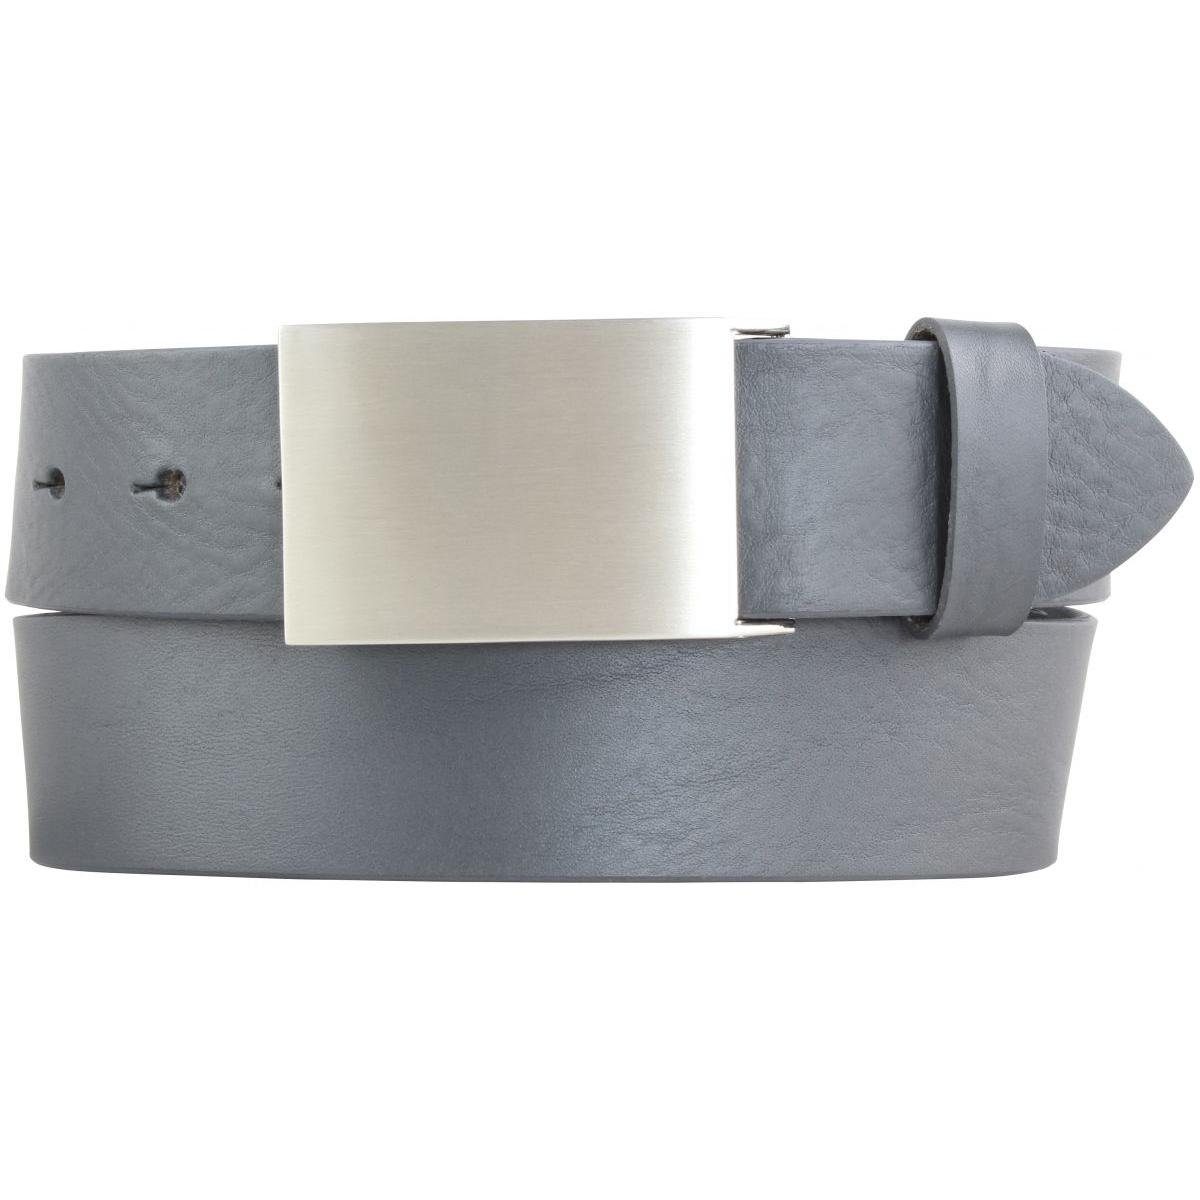 BELTINGER Ledergürtel Gürtel aus Vollrindleder 4,0 cm - Jeans-Gürtel für Herren 40mm - Jeans Dunkelgrau, Silber